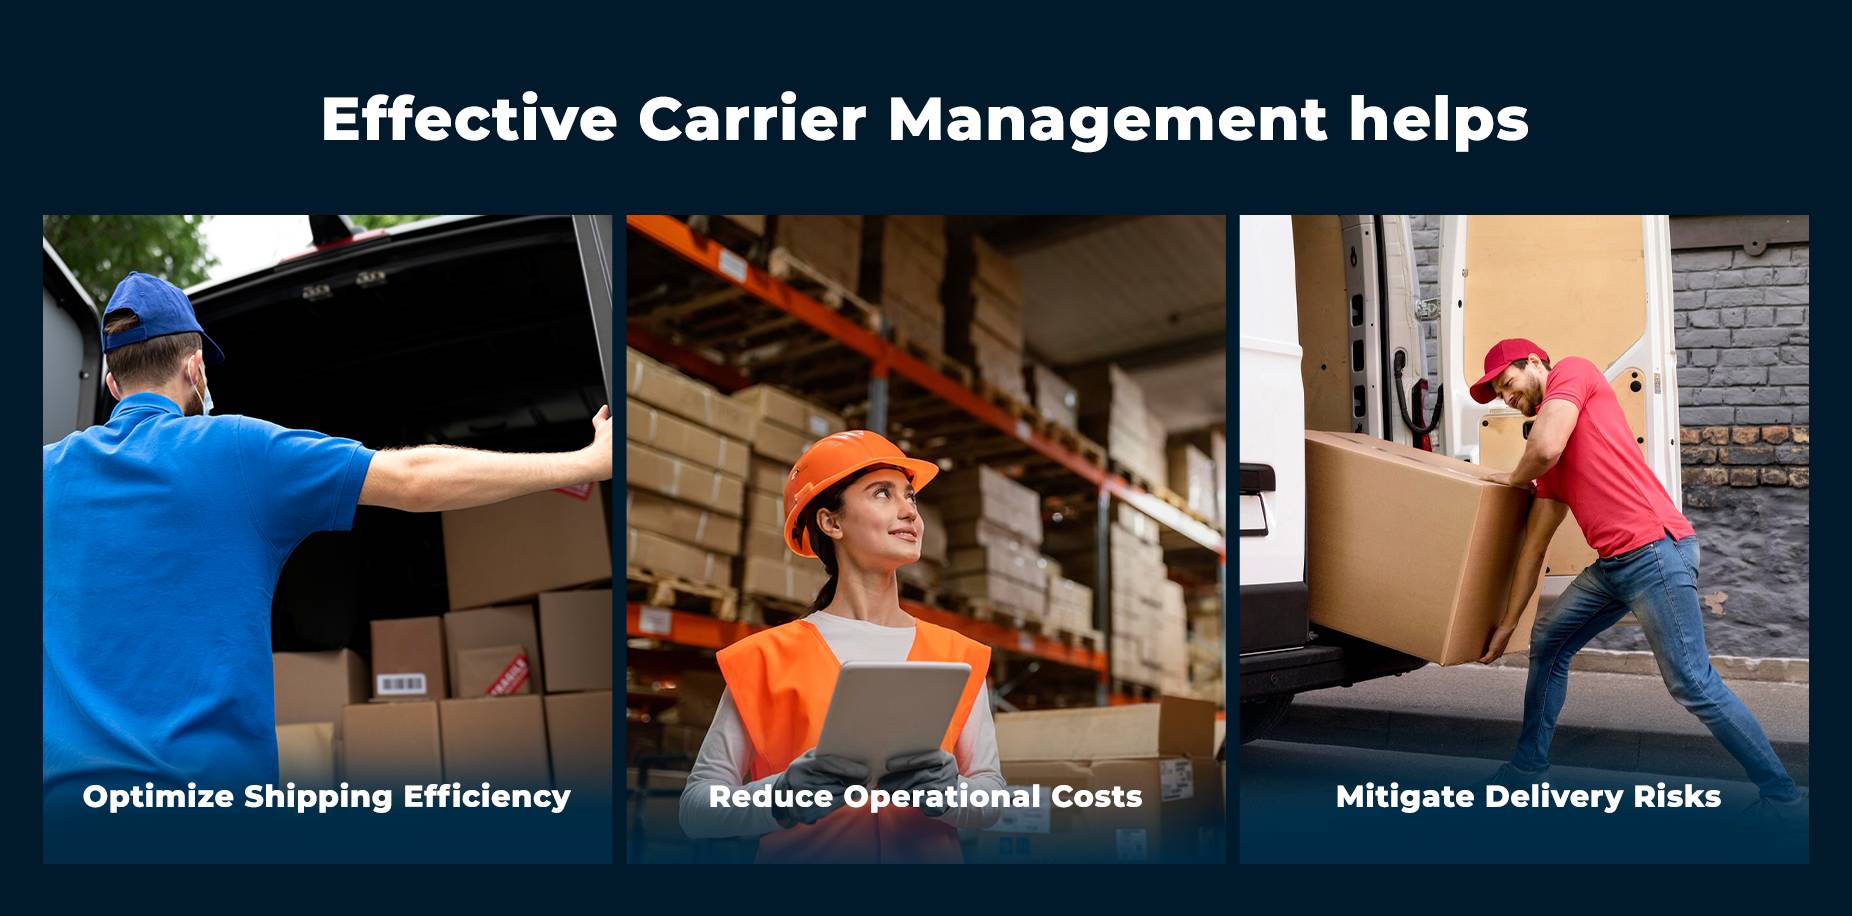 What does efficient carrier management mean?